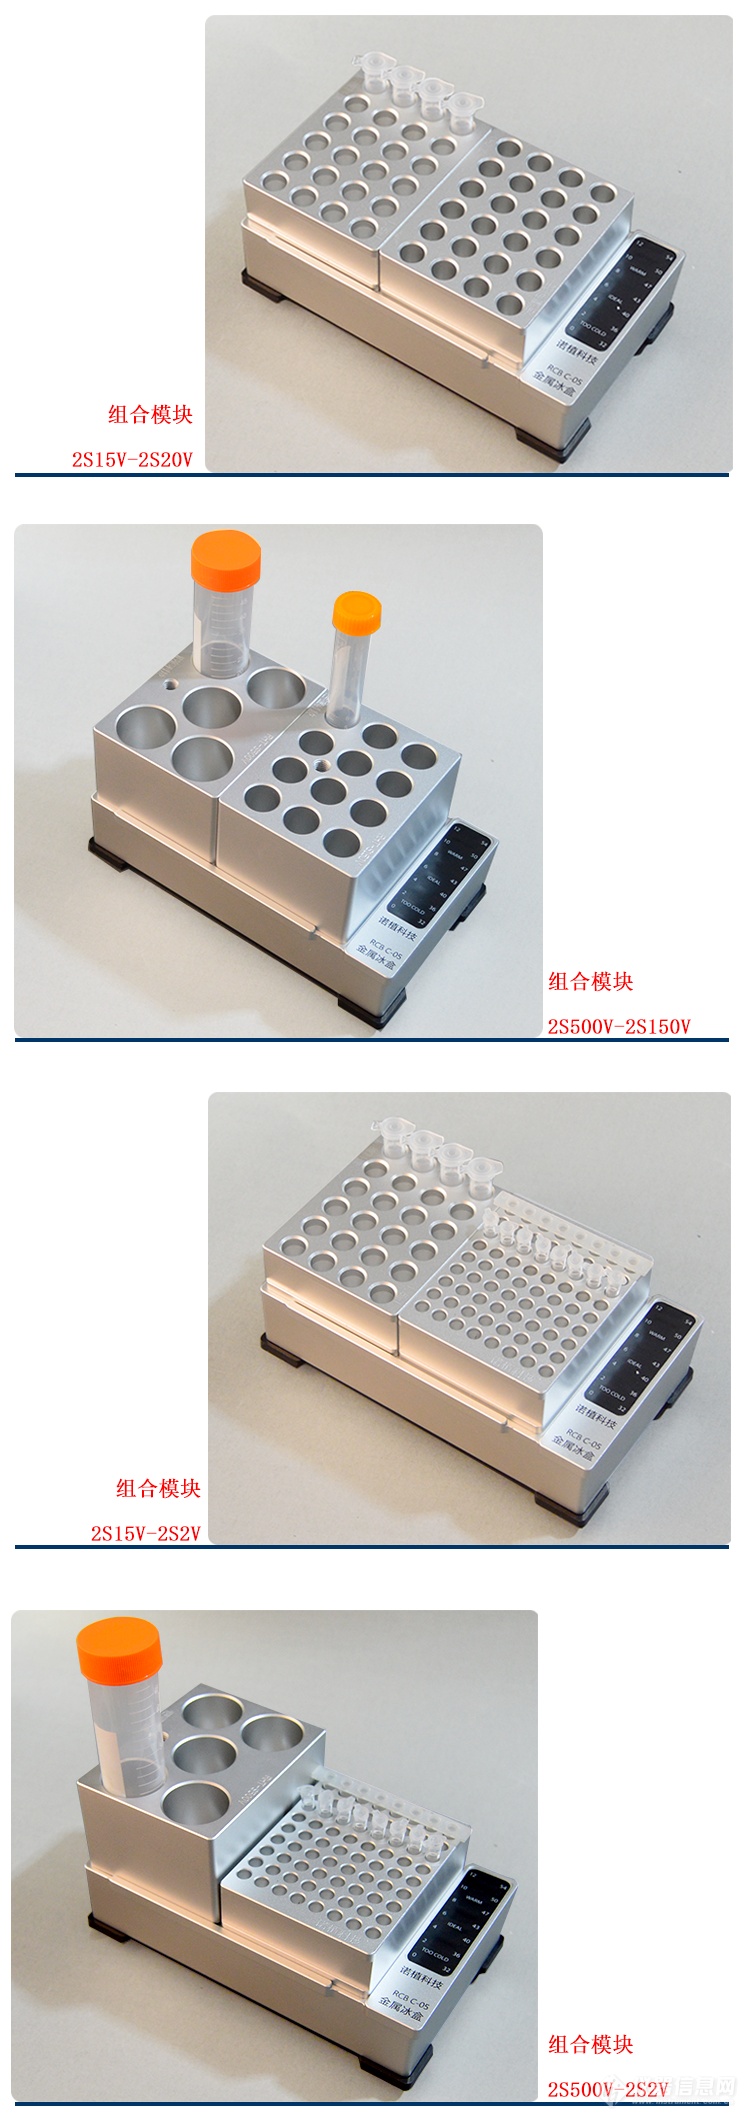 RHT-样品管冷却金属冰盒介绍_09.png